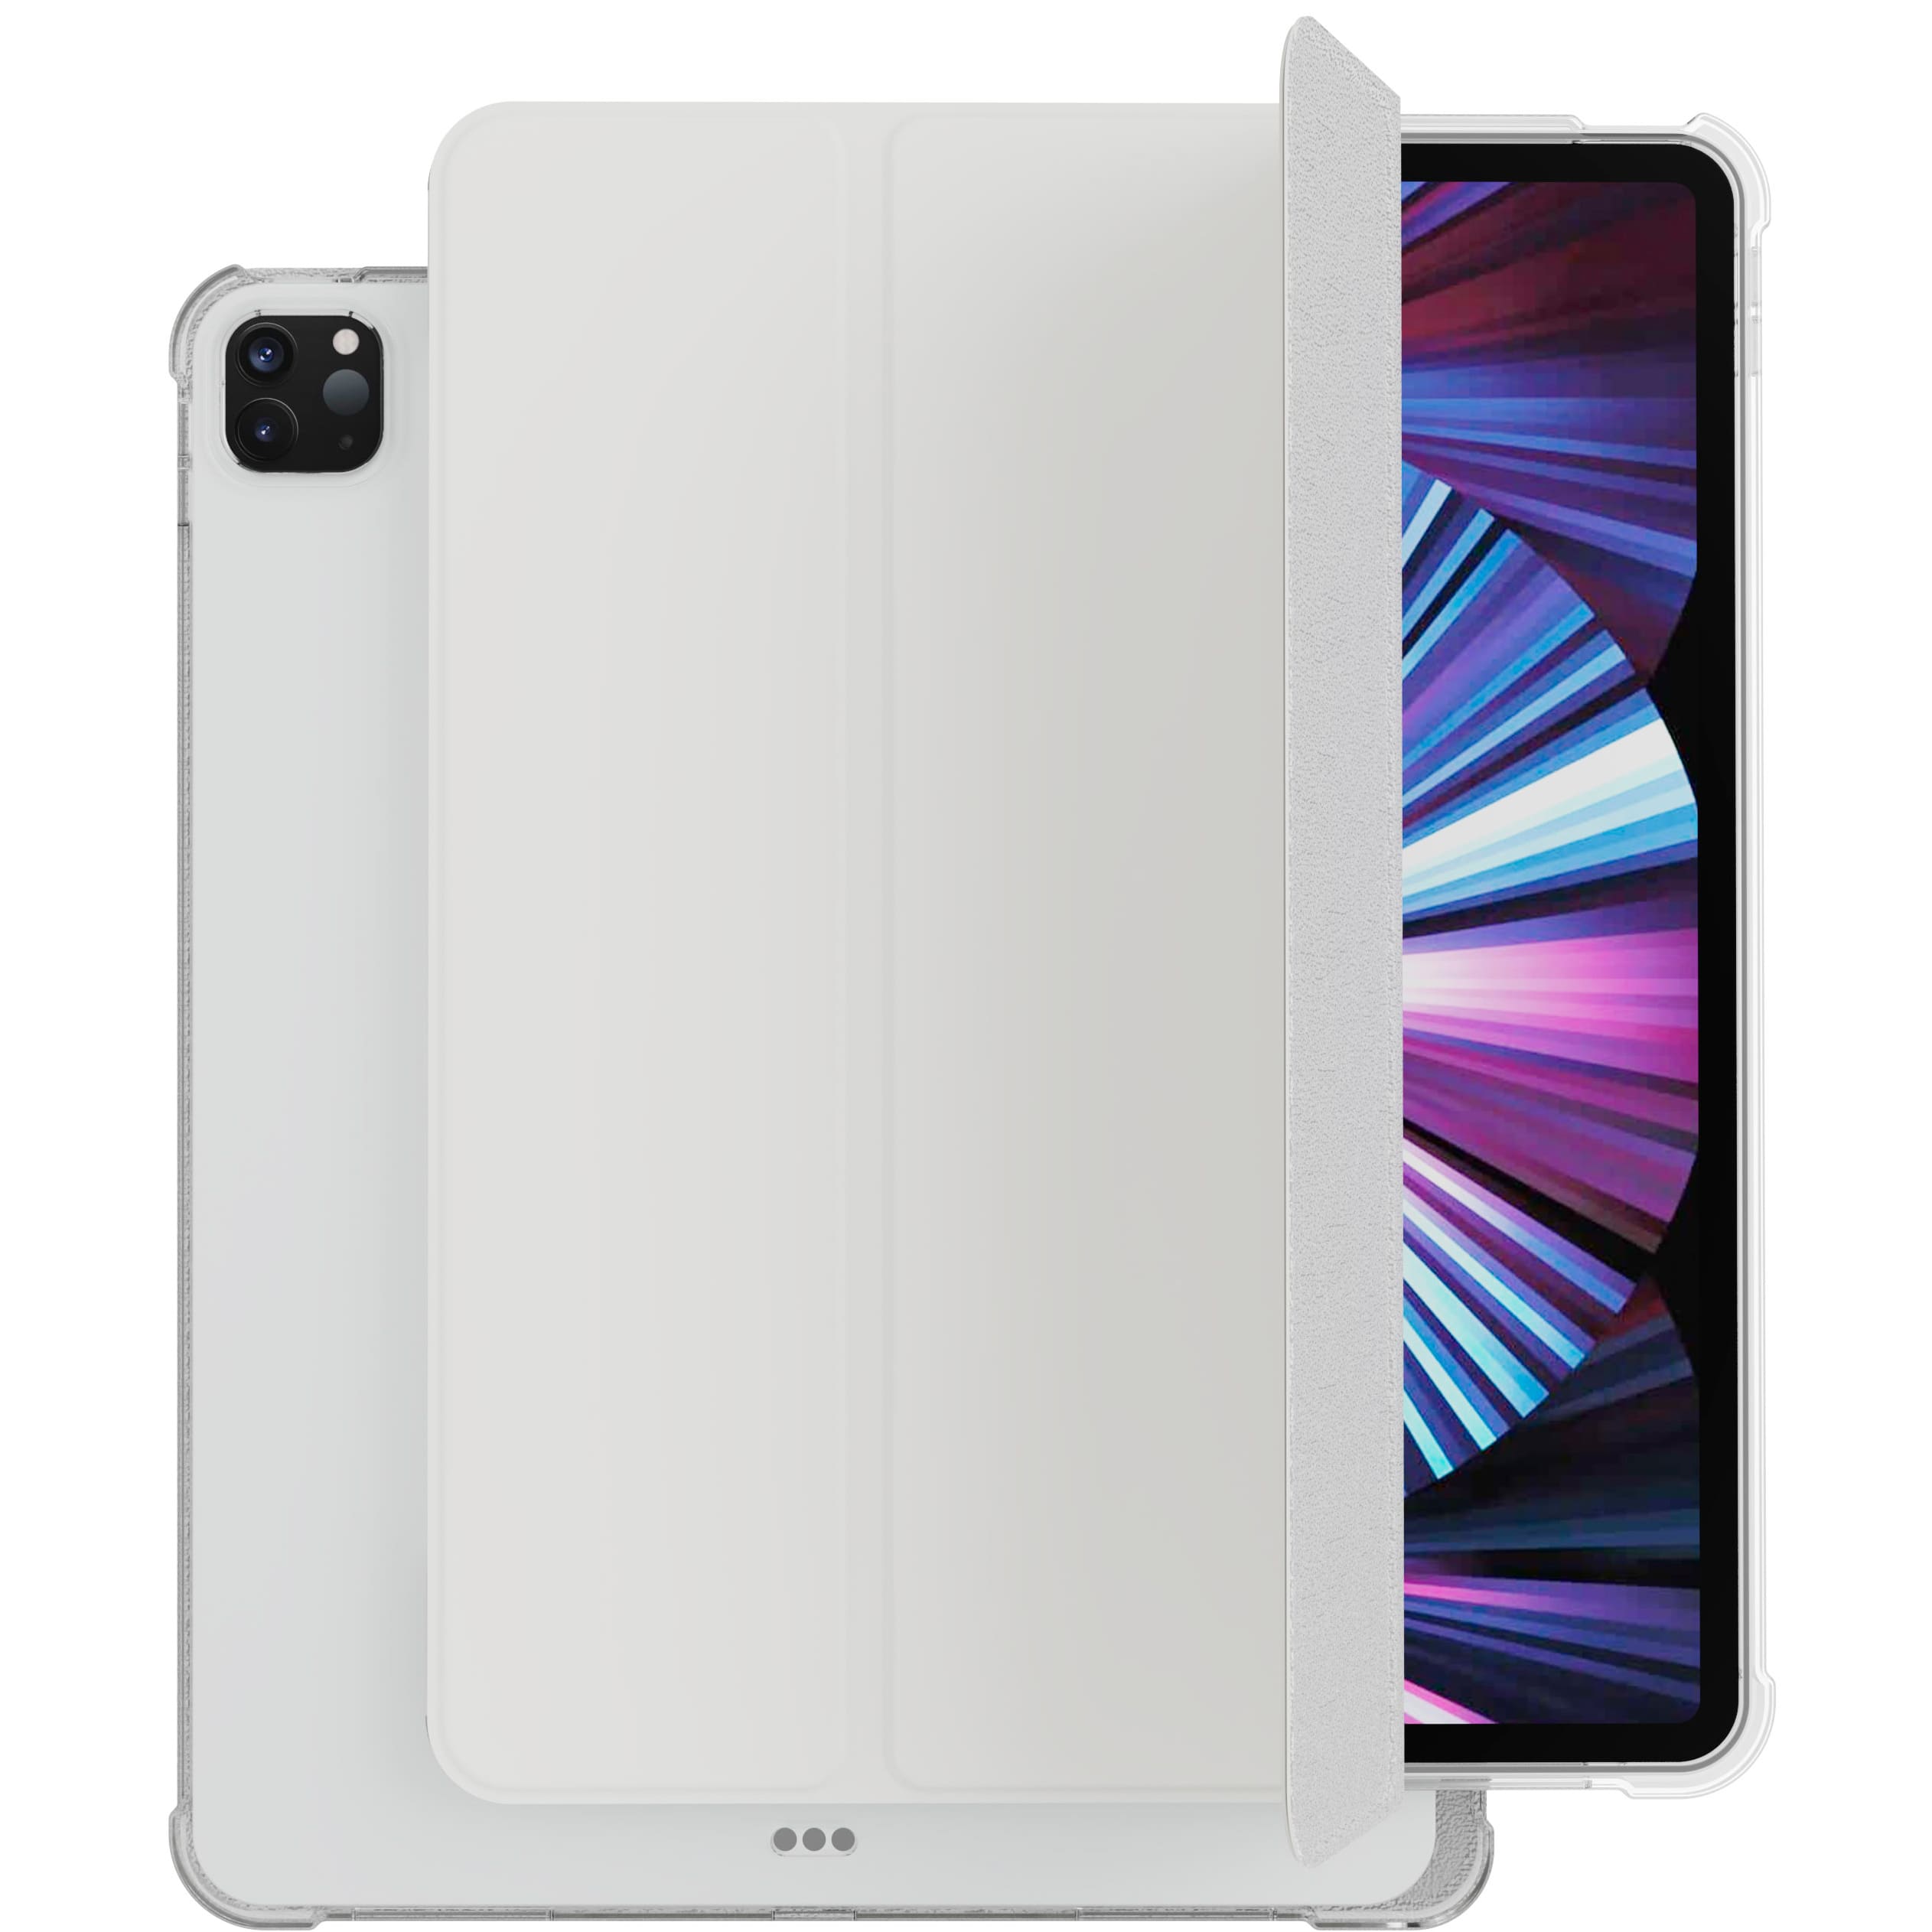 Фото — Чехол для планшета vlp для iPad Pro 2021 (12.9") Dual Folio, белый